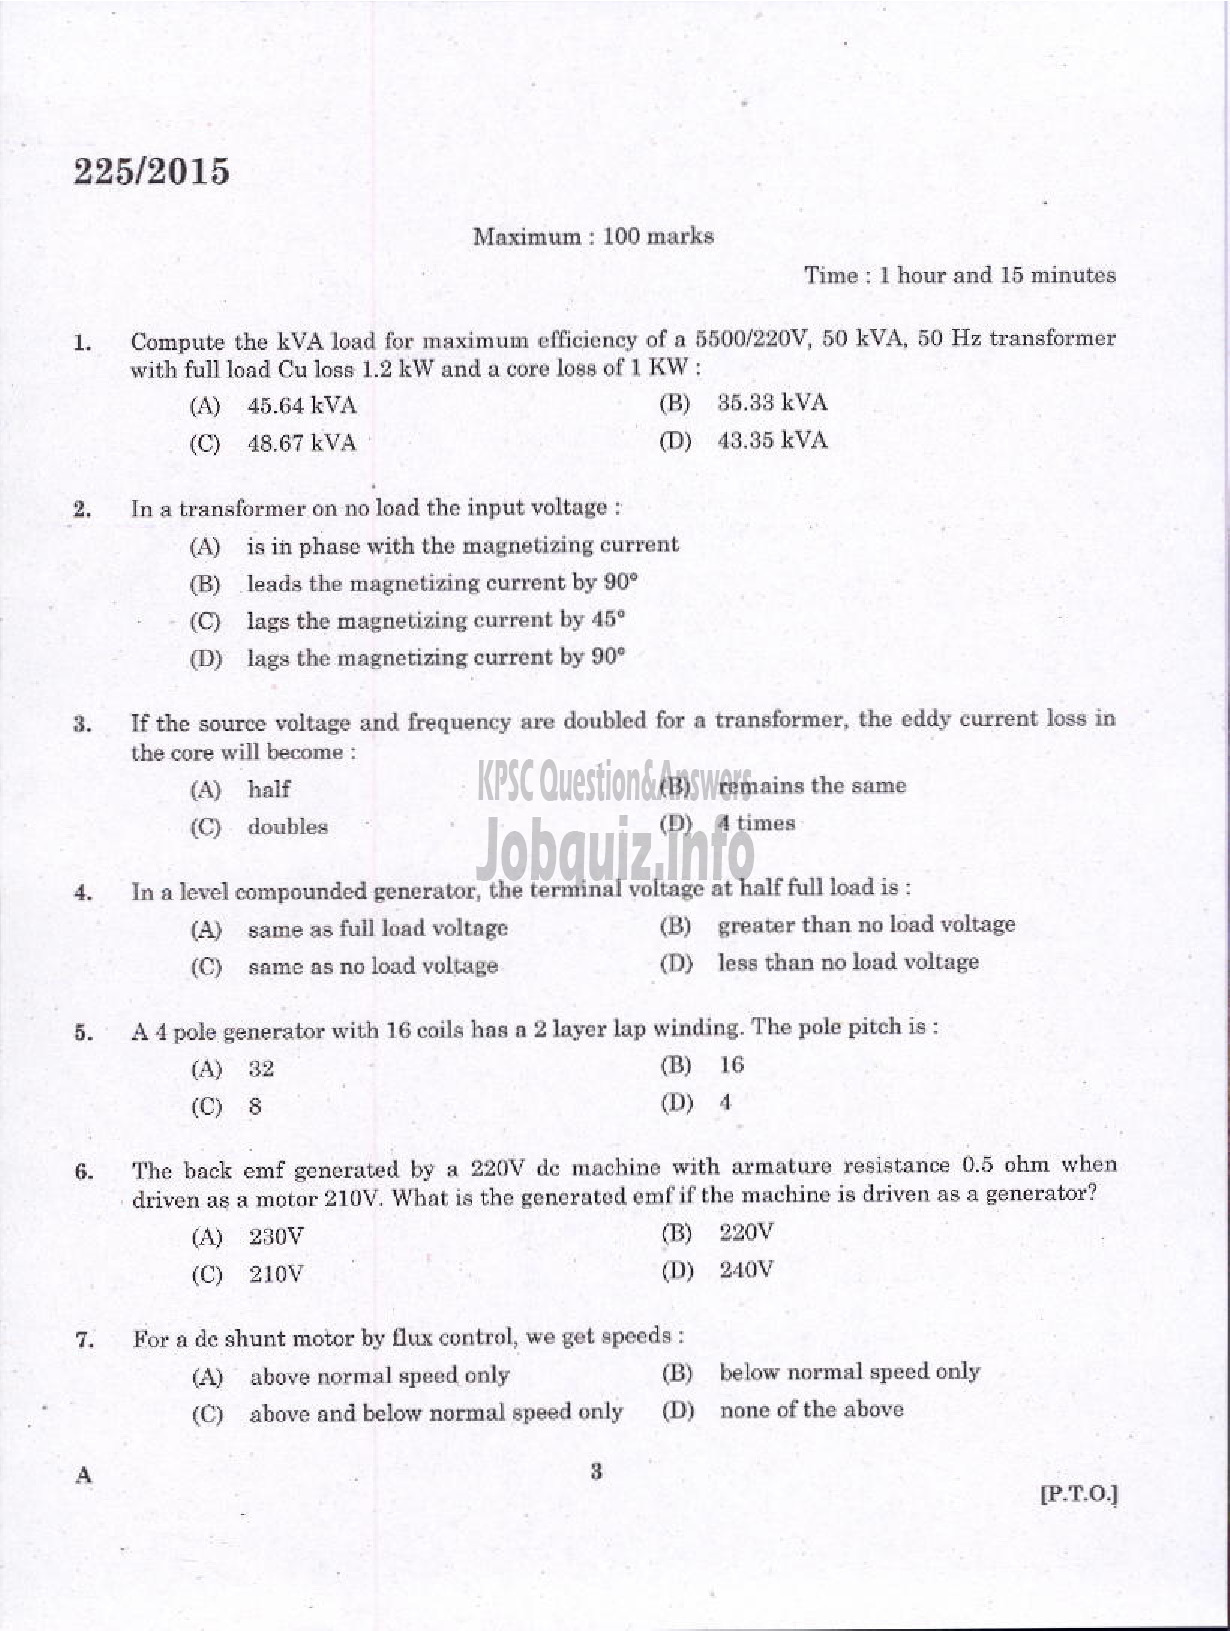 Kerala PSC Question Paper - VOCATIONAL TEACHER MAINTENANCE AND REPAIRS OF DOMESTIC APPLIANCES VHSE-1